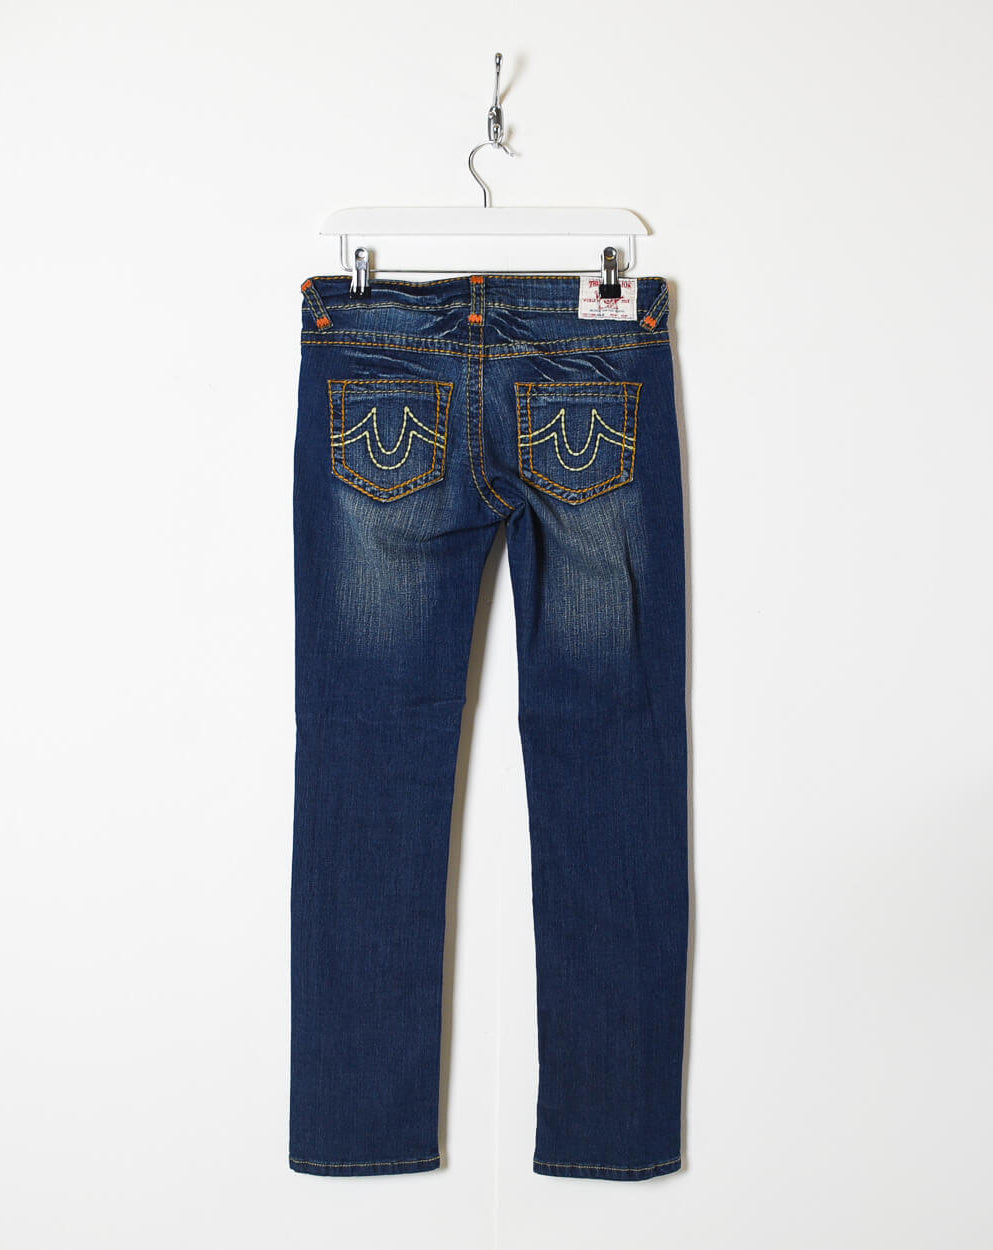 Navy True Religion Jeans - W30 L30